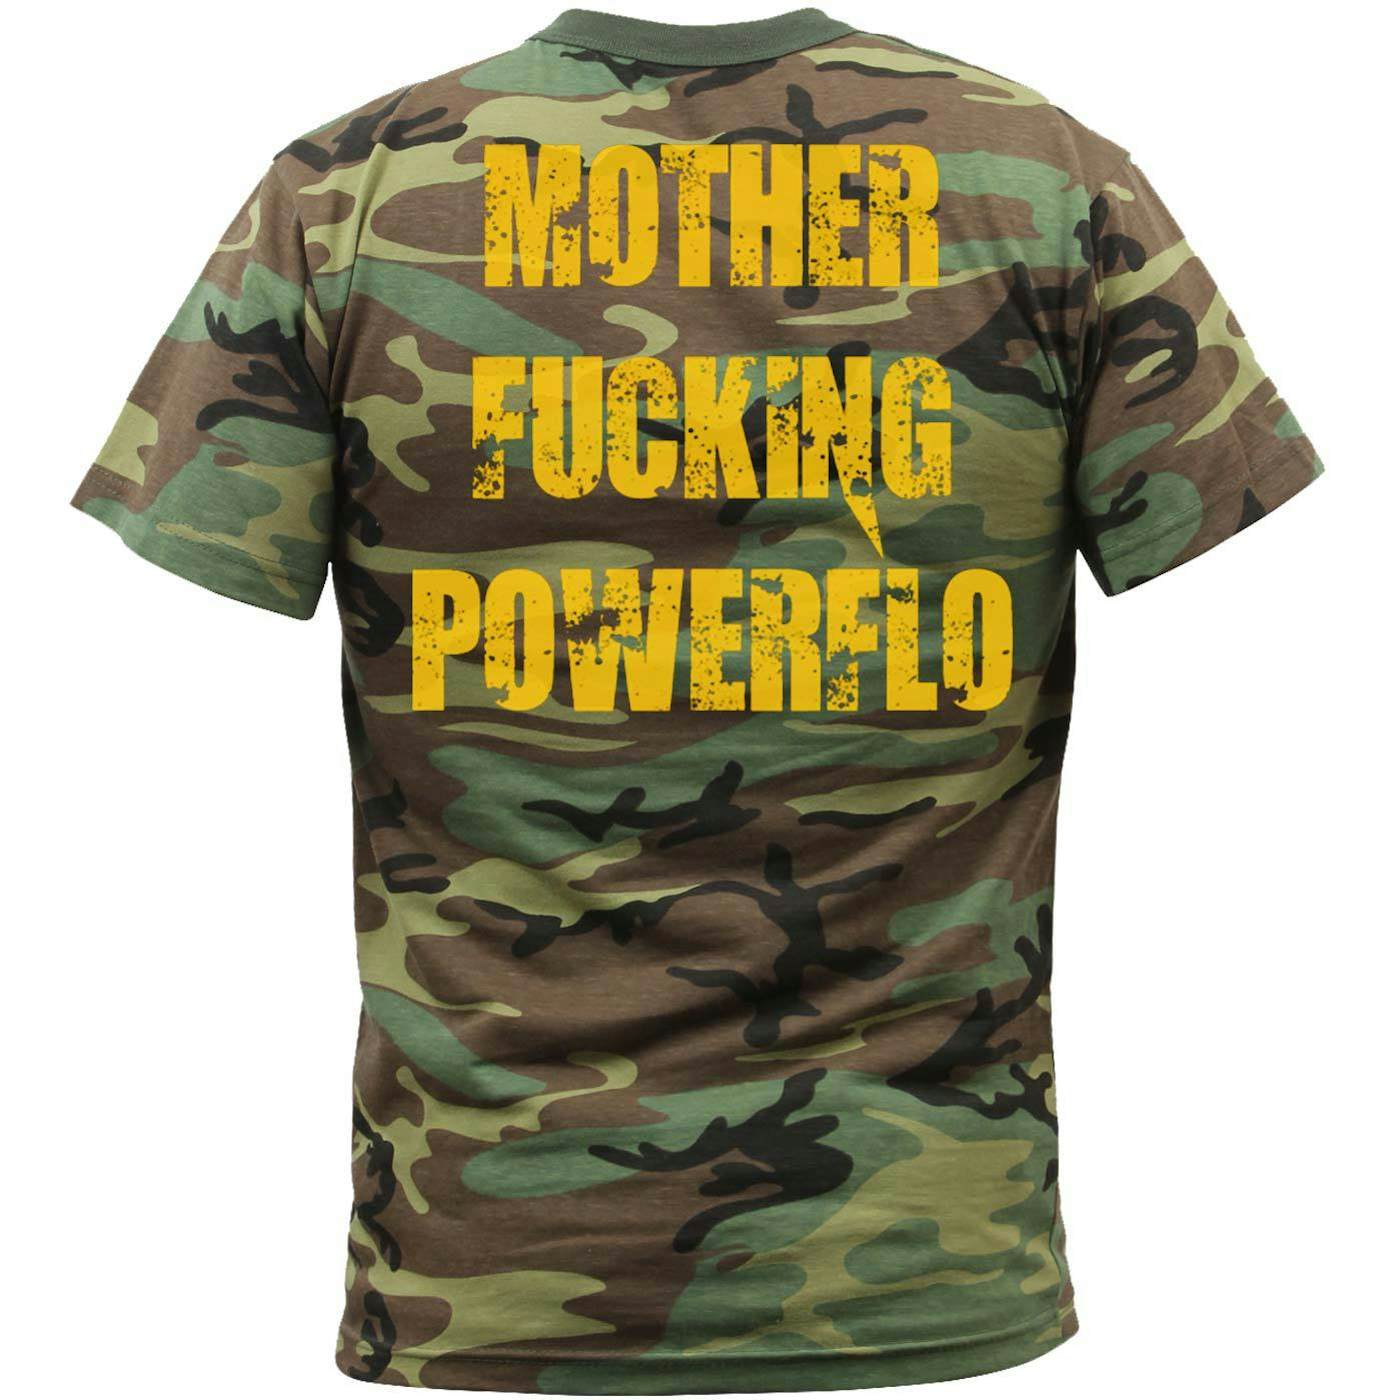 Powerflo Worldwide-mfp Camo T-Shirt